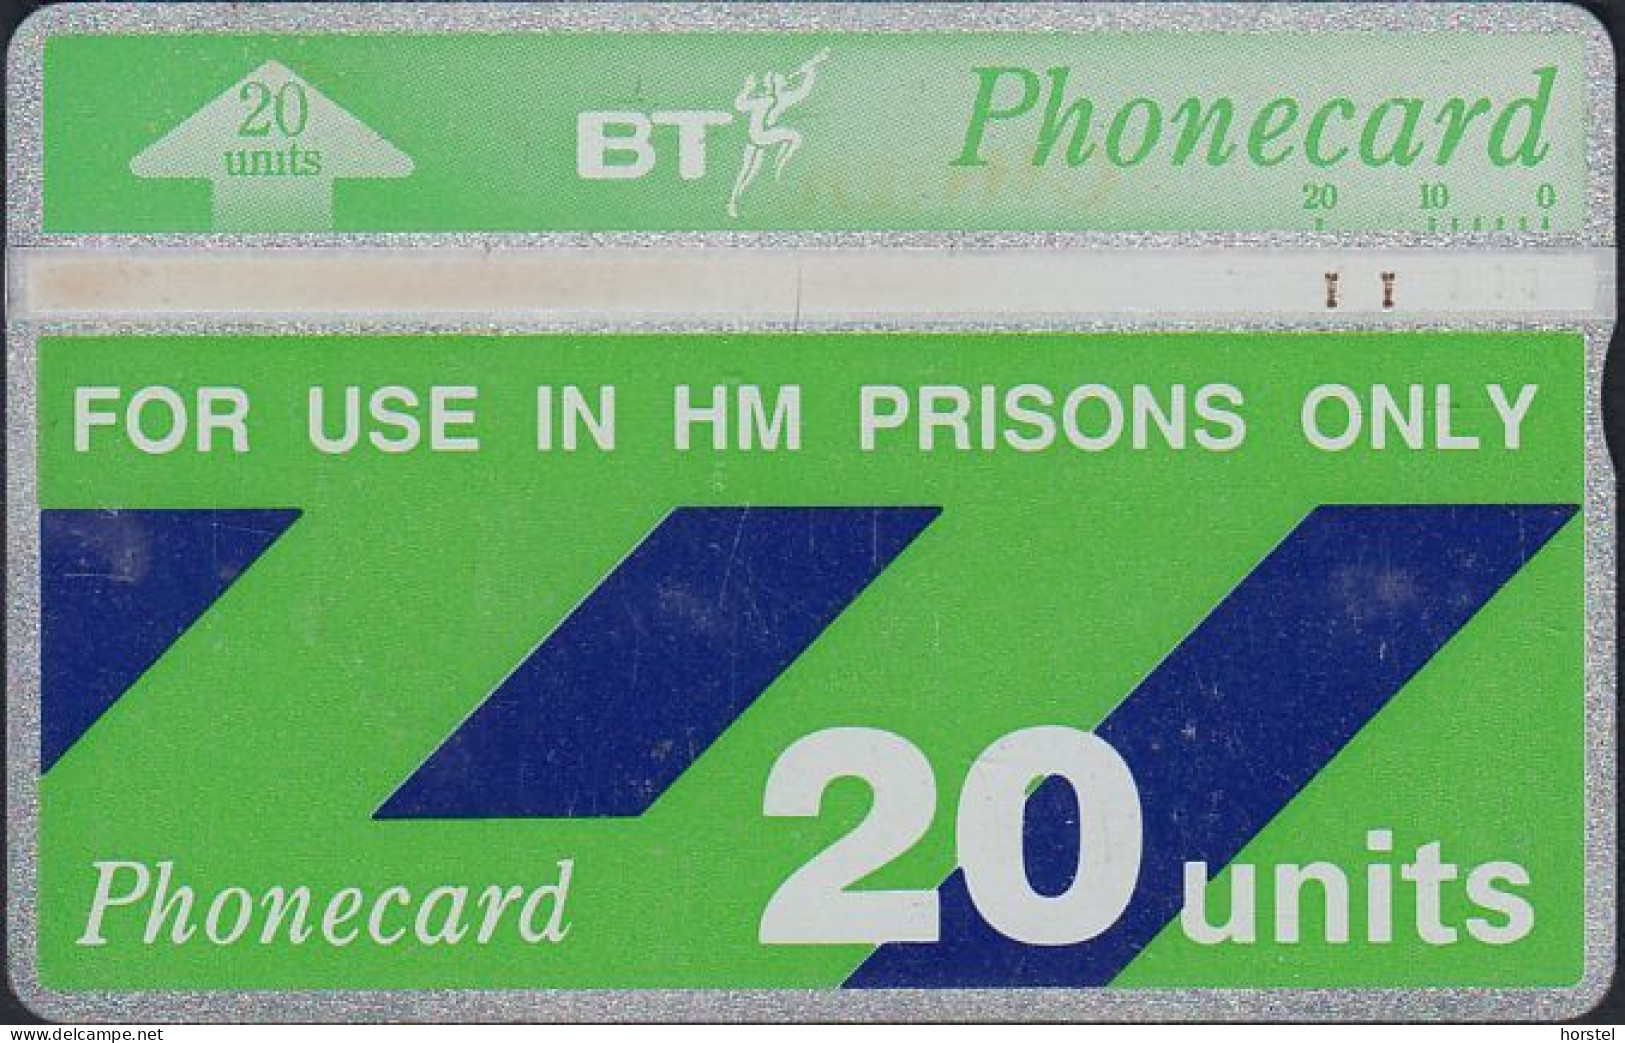 UK - British Telecom L&G H.M. Prison Card CUP005  (212F)  20 Units - [ 3] Prisons